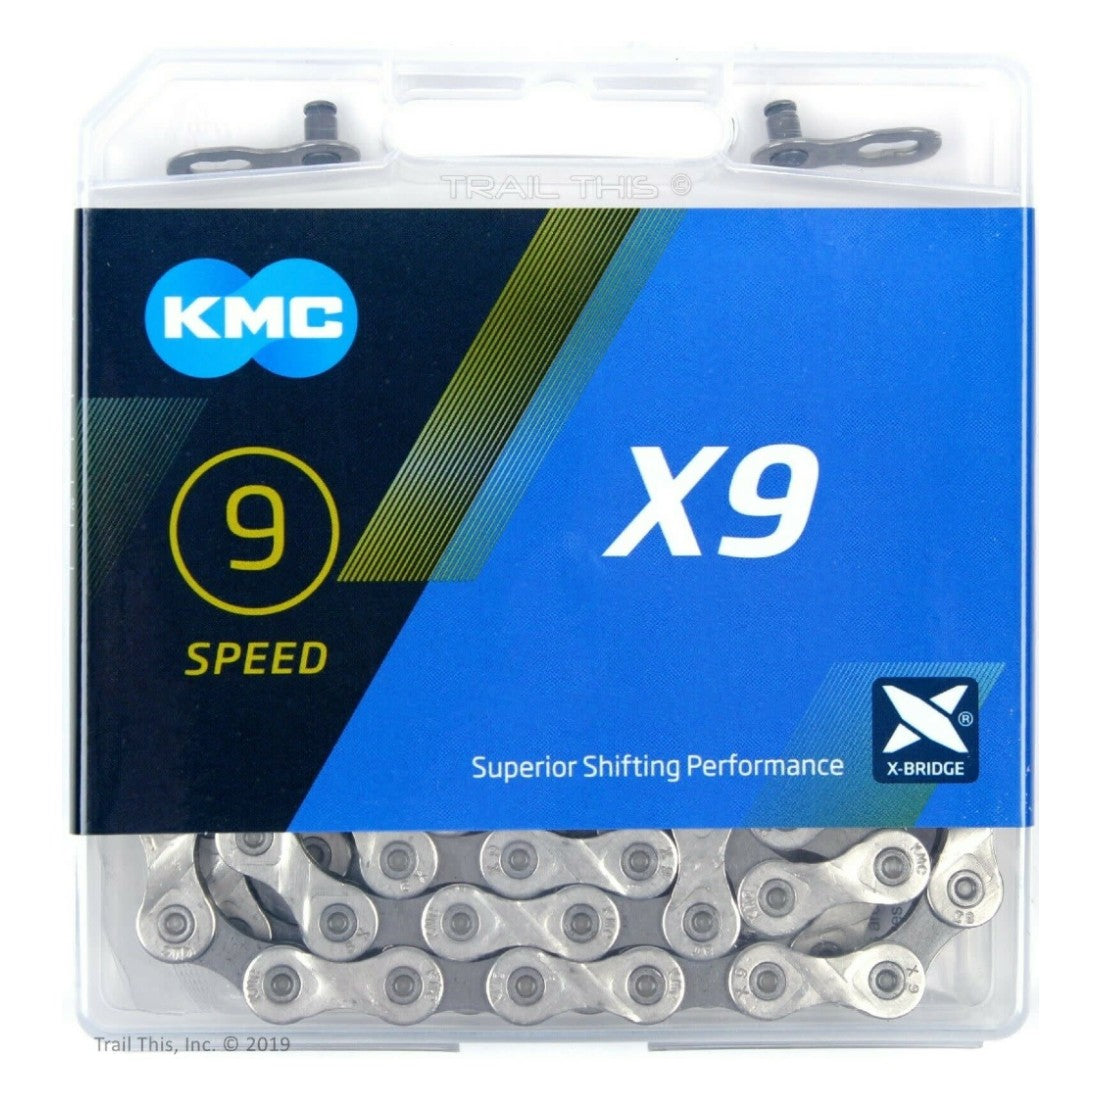 KMC X9 9-Speed Bike Chain 116 Links - Silver / Gray